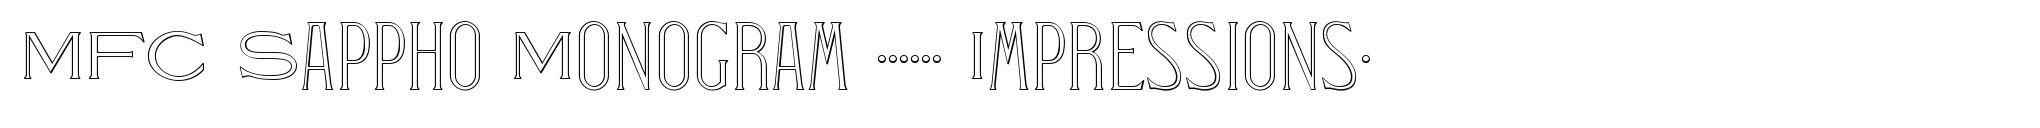 MFC Sappho Monogram (25000 Impressions) image